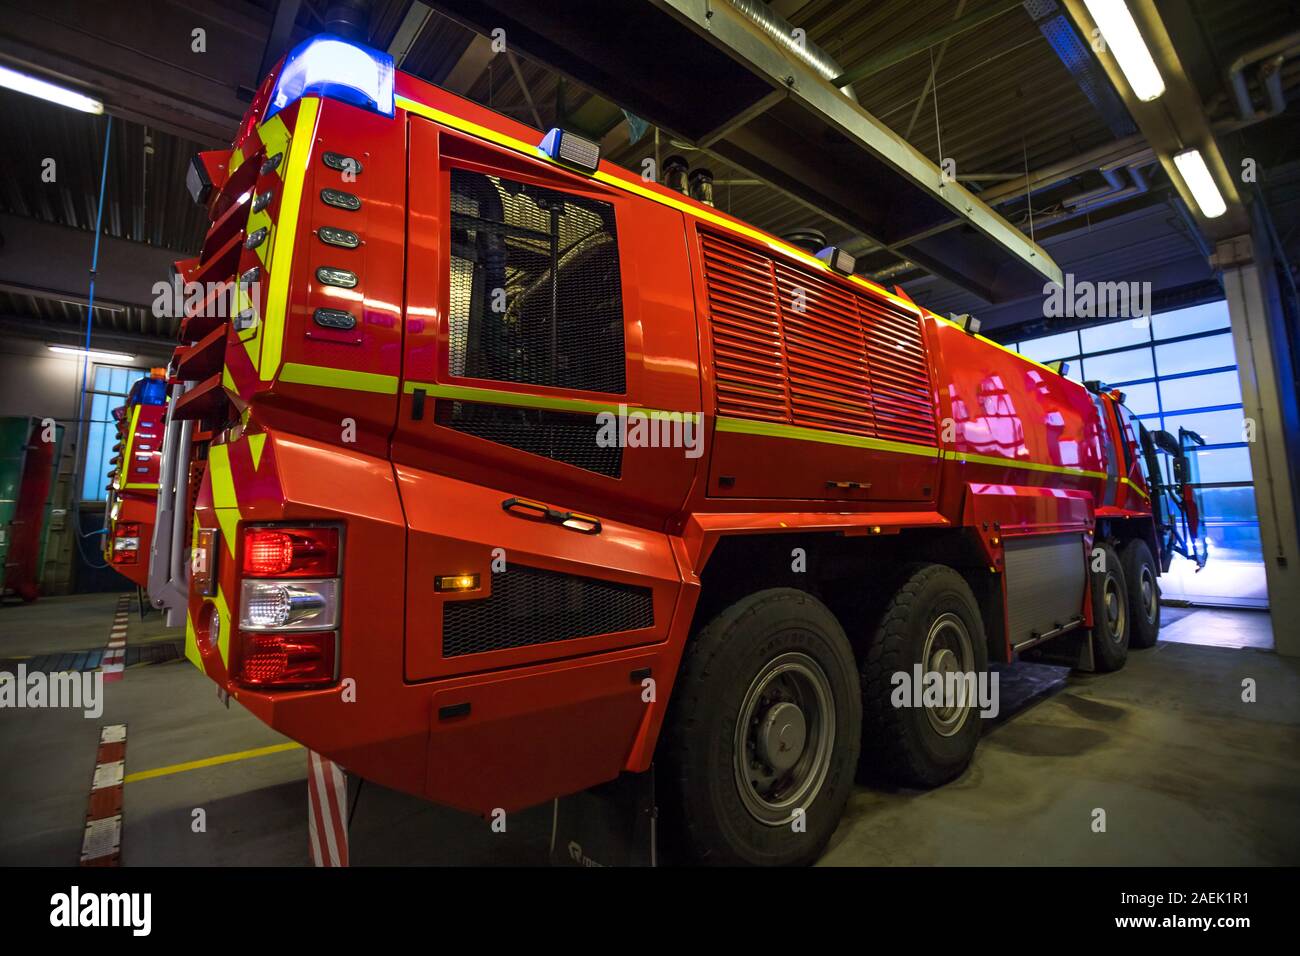 modern airport fire department fire engine Stock Photo